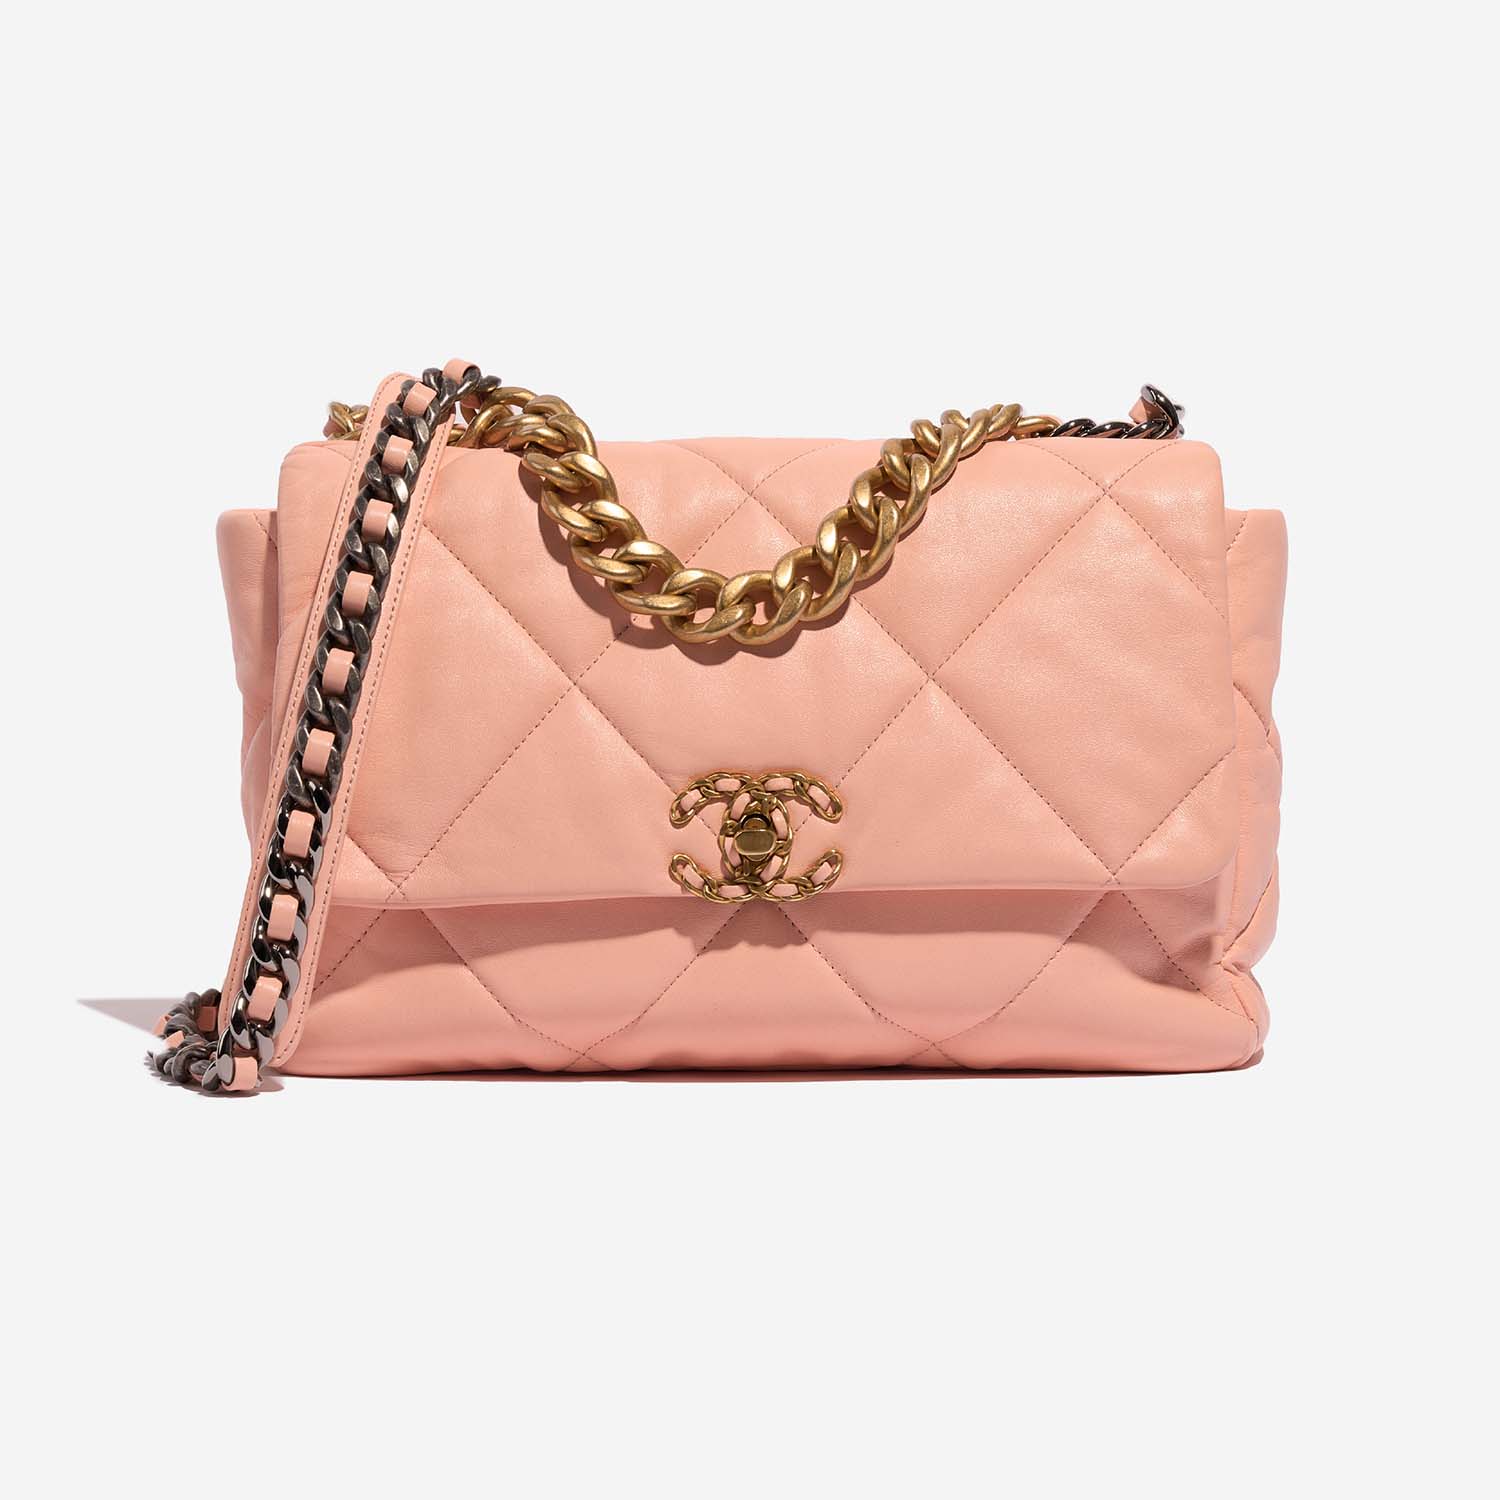 Chanel 19 LargeFlapBag Peach 2F S | Sell your designer bag on Saclab.com